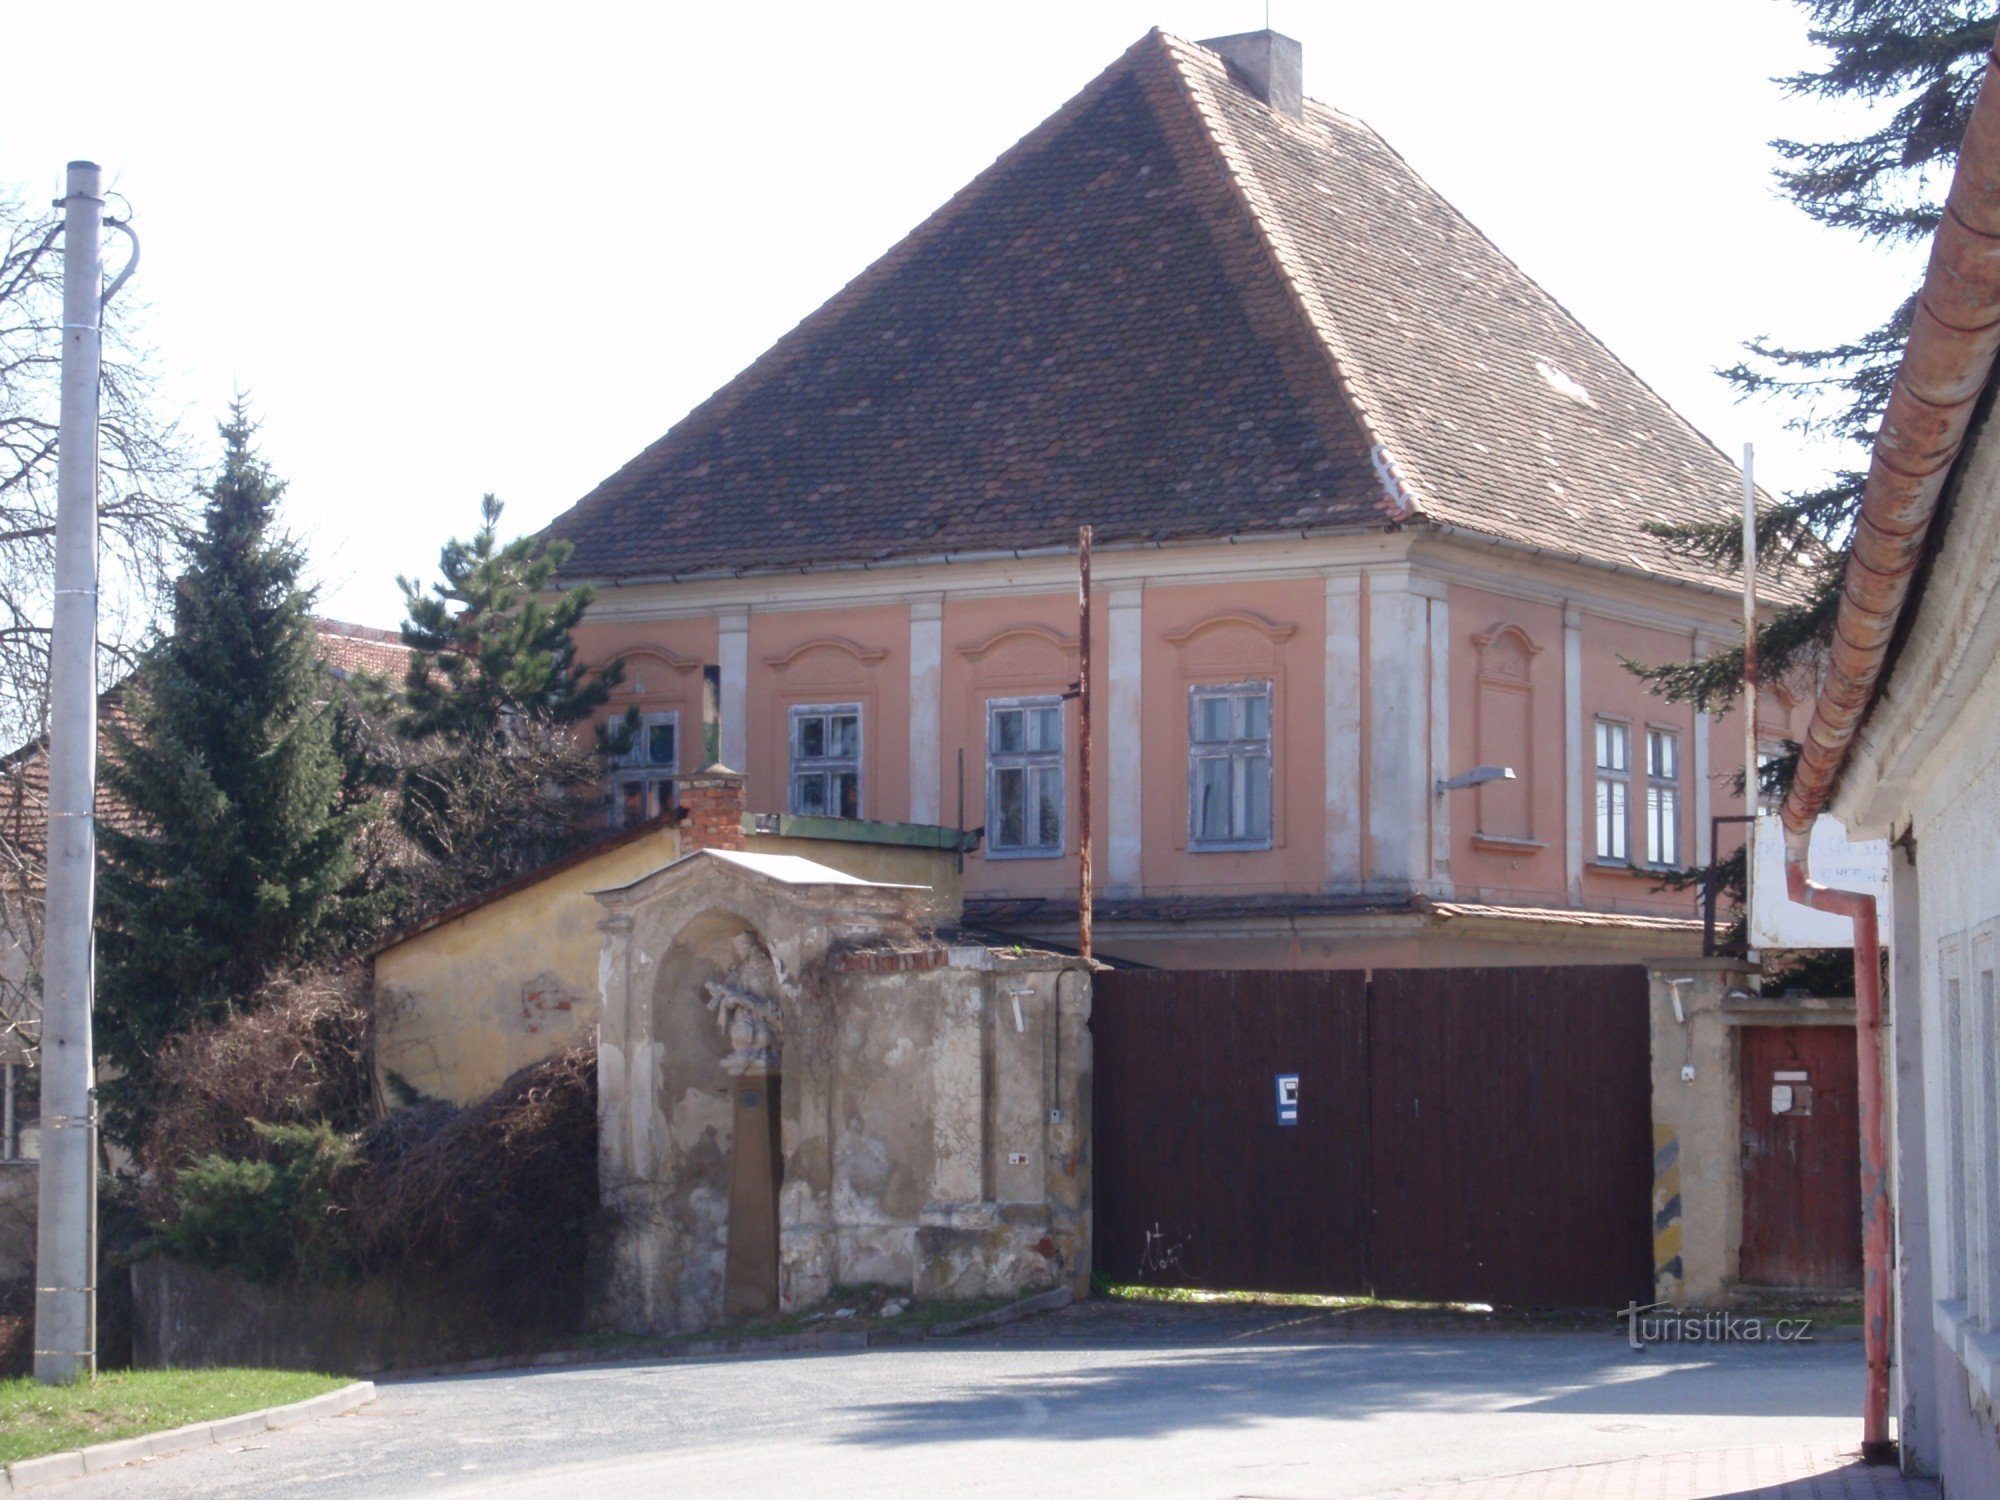 Dvorac u Brněnské Ivanovice